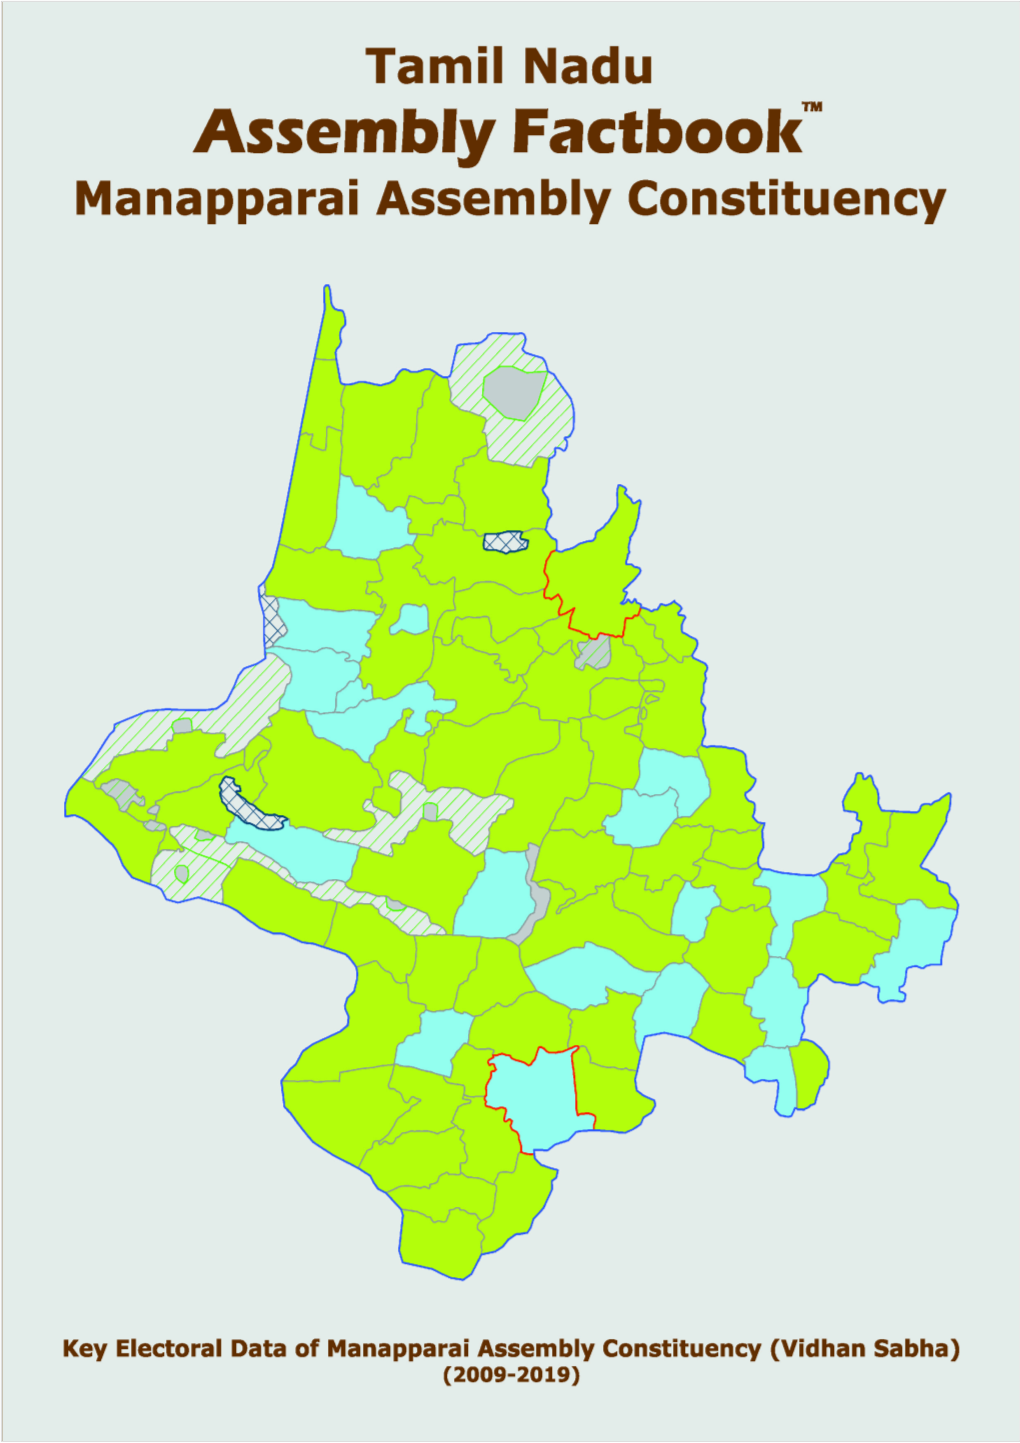 Manapparai Assembly Tamil Nadu Factbook